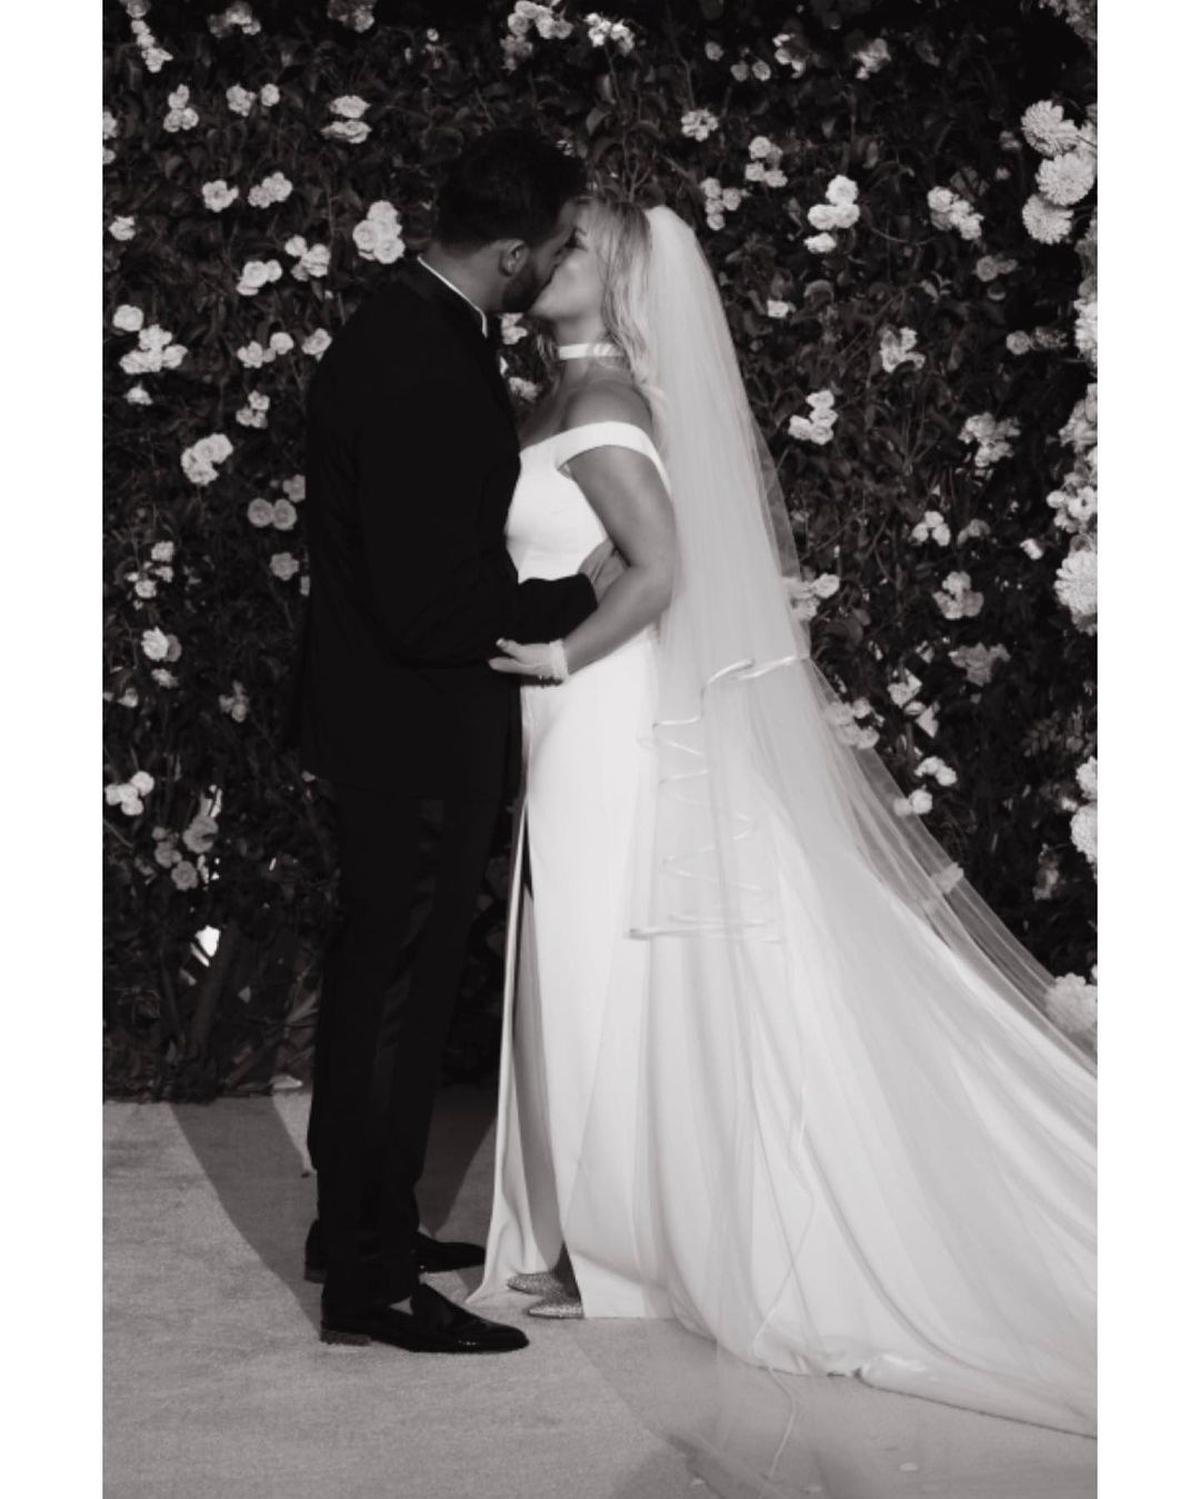  | Sam Asghari y Britney Spears en su boda.
Fuente: Instagram @britneyspears????